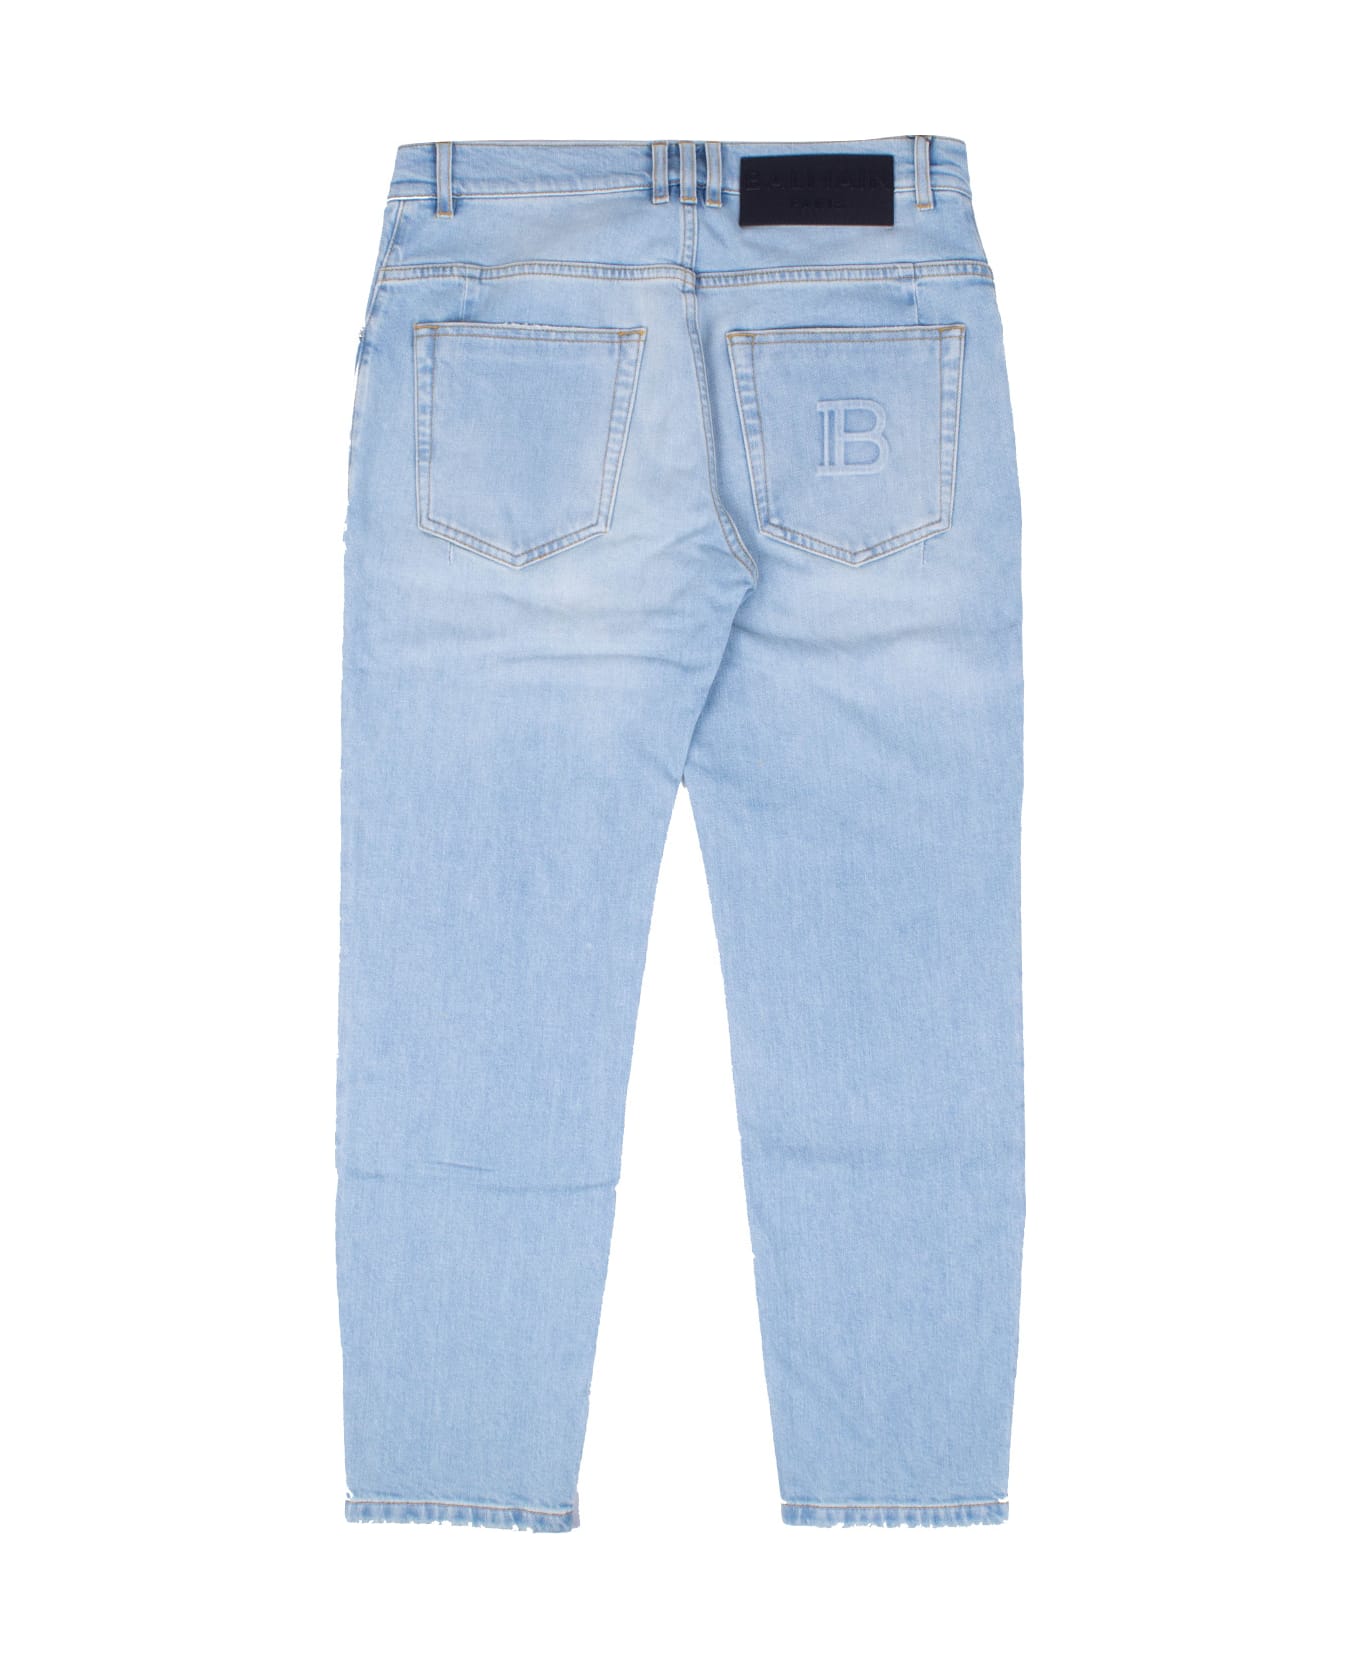 Balmain Jeans - Light blue デニム